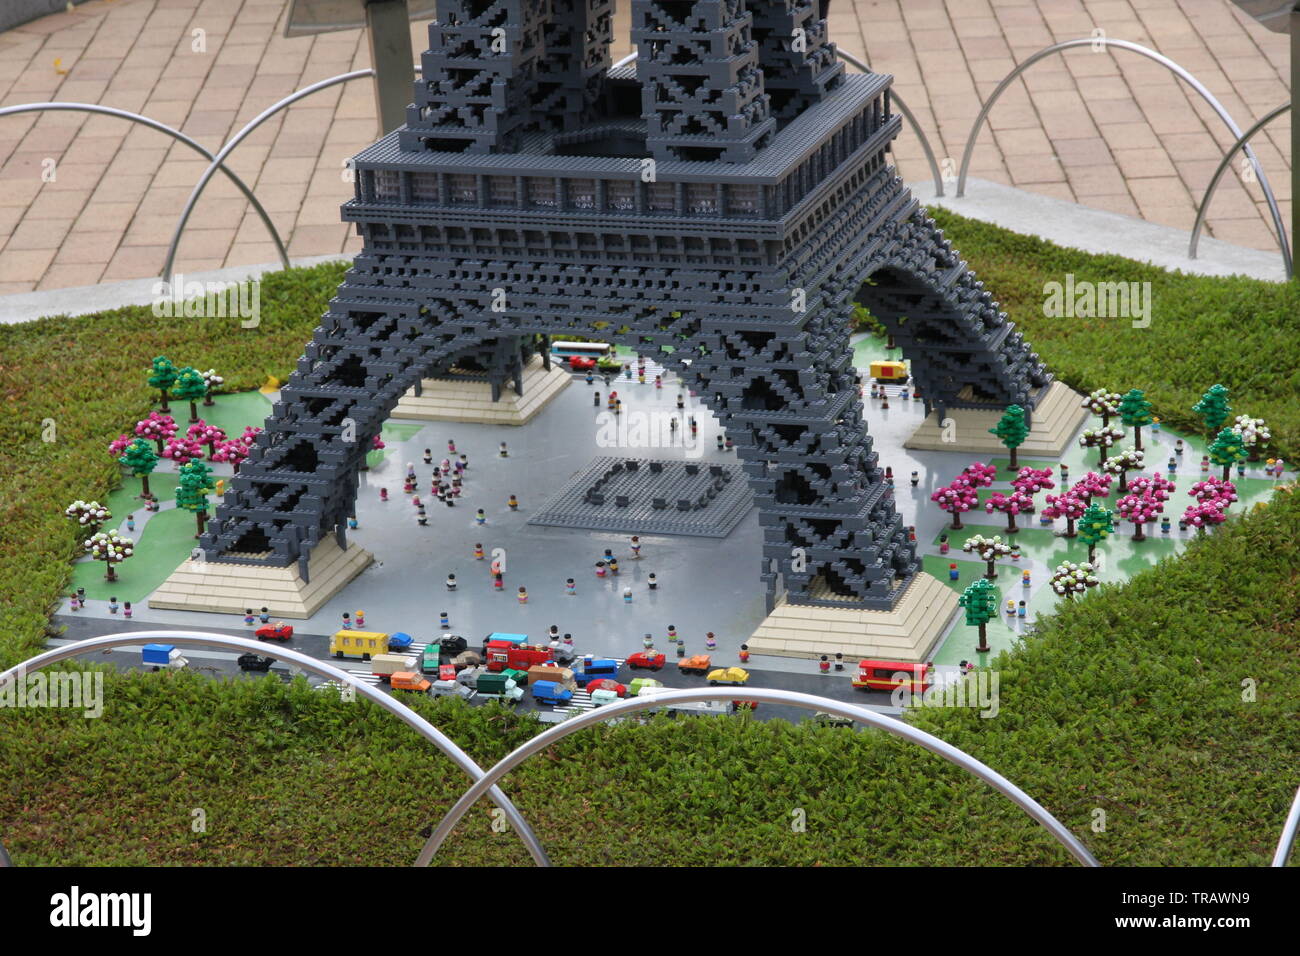 Lego Eiffel tower in Legoland Billund, Denmark Stock Photo - Alamy